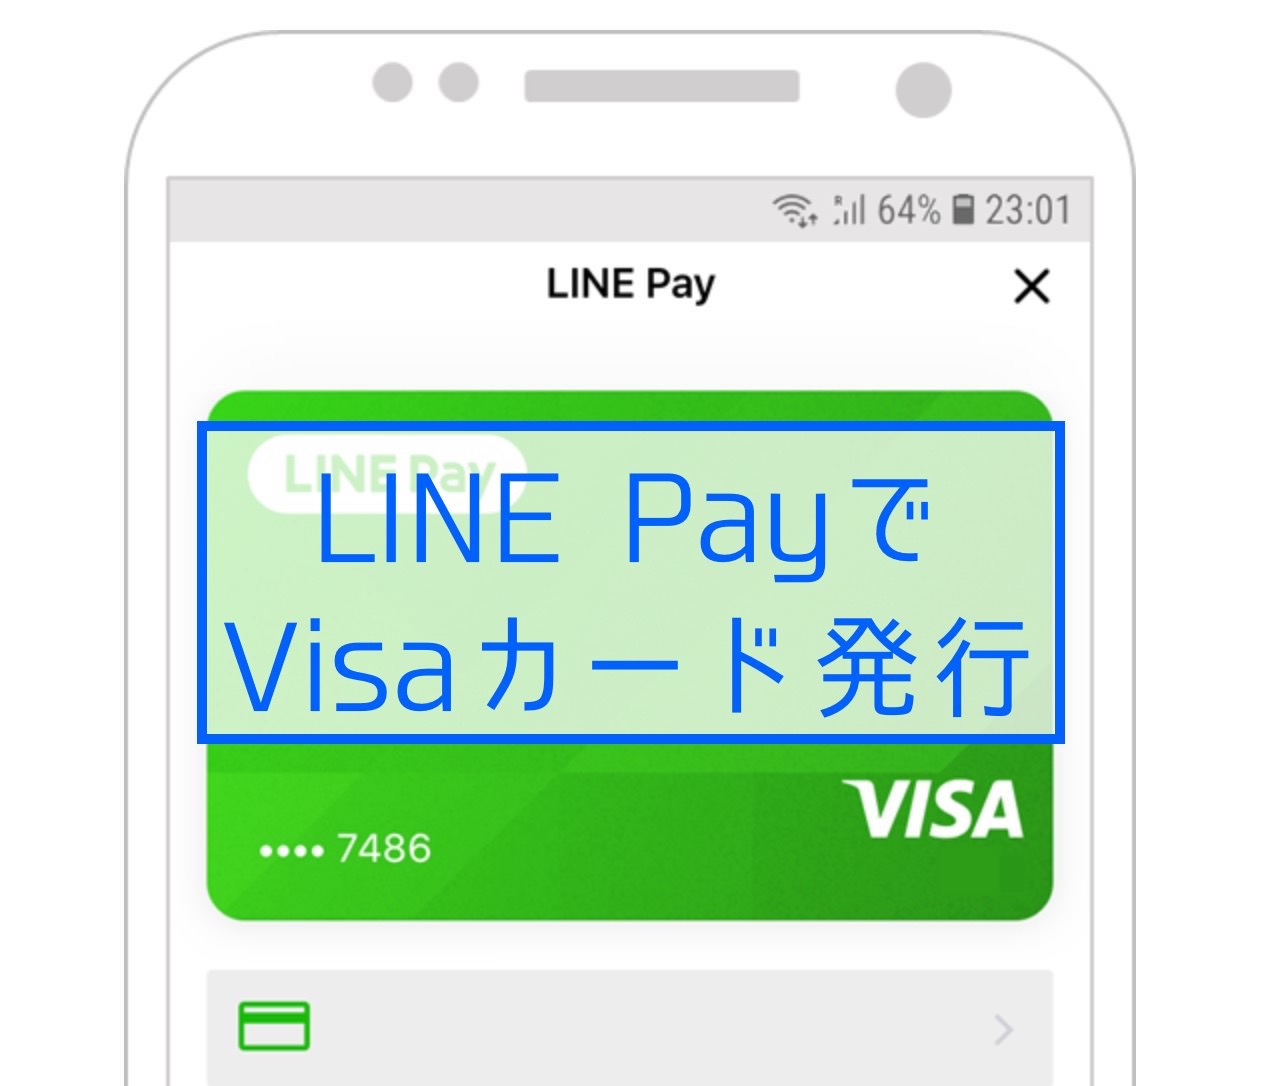 【LINE Pay】アプリ内でVisaカードの発行・利用が可能に 〜Visa加盟店でLINE Payが利用可能に